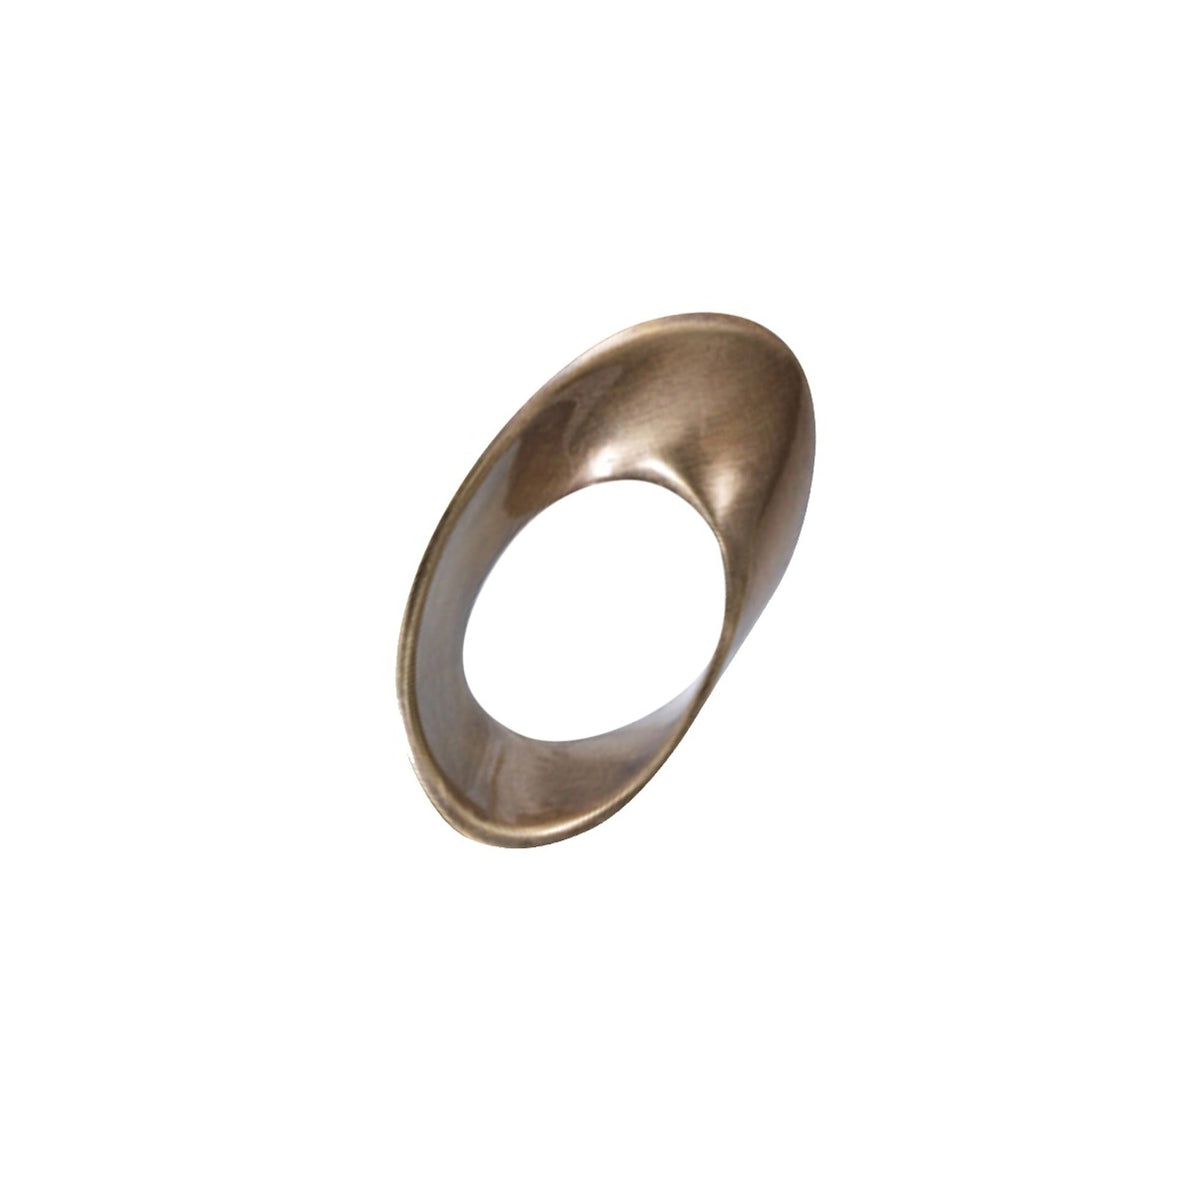 Morgan Napkin Ring, Set of 4